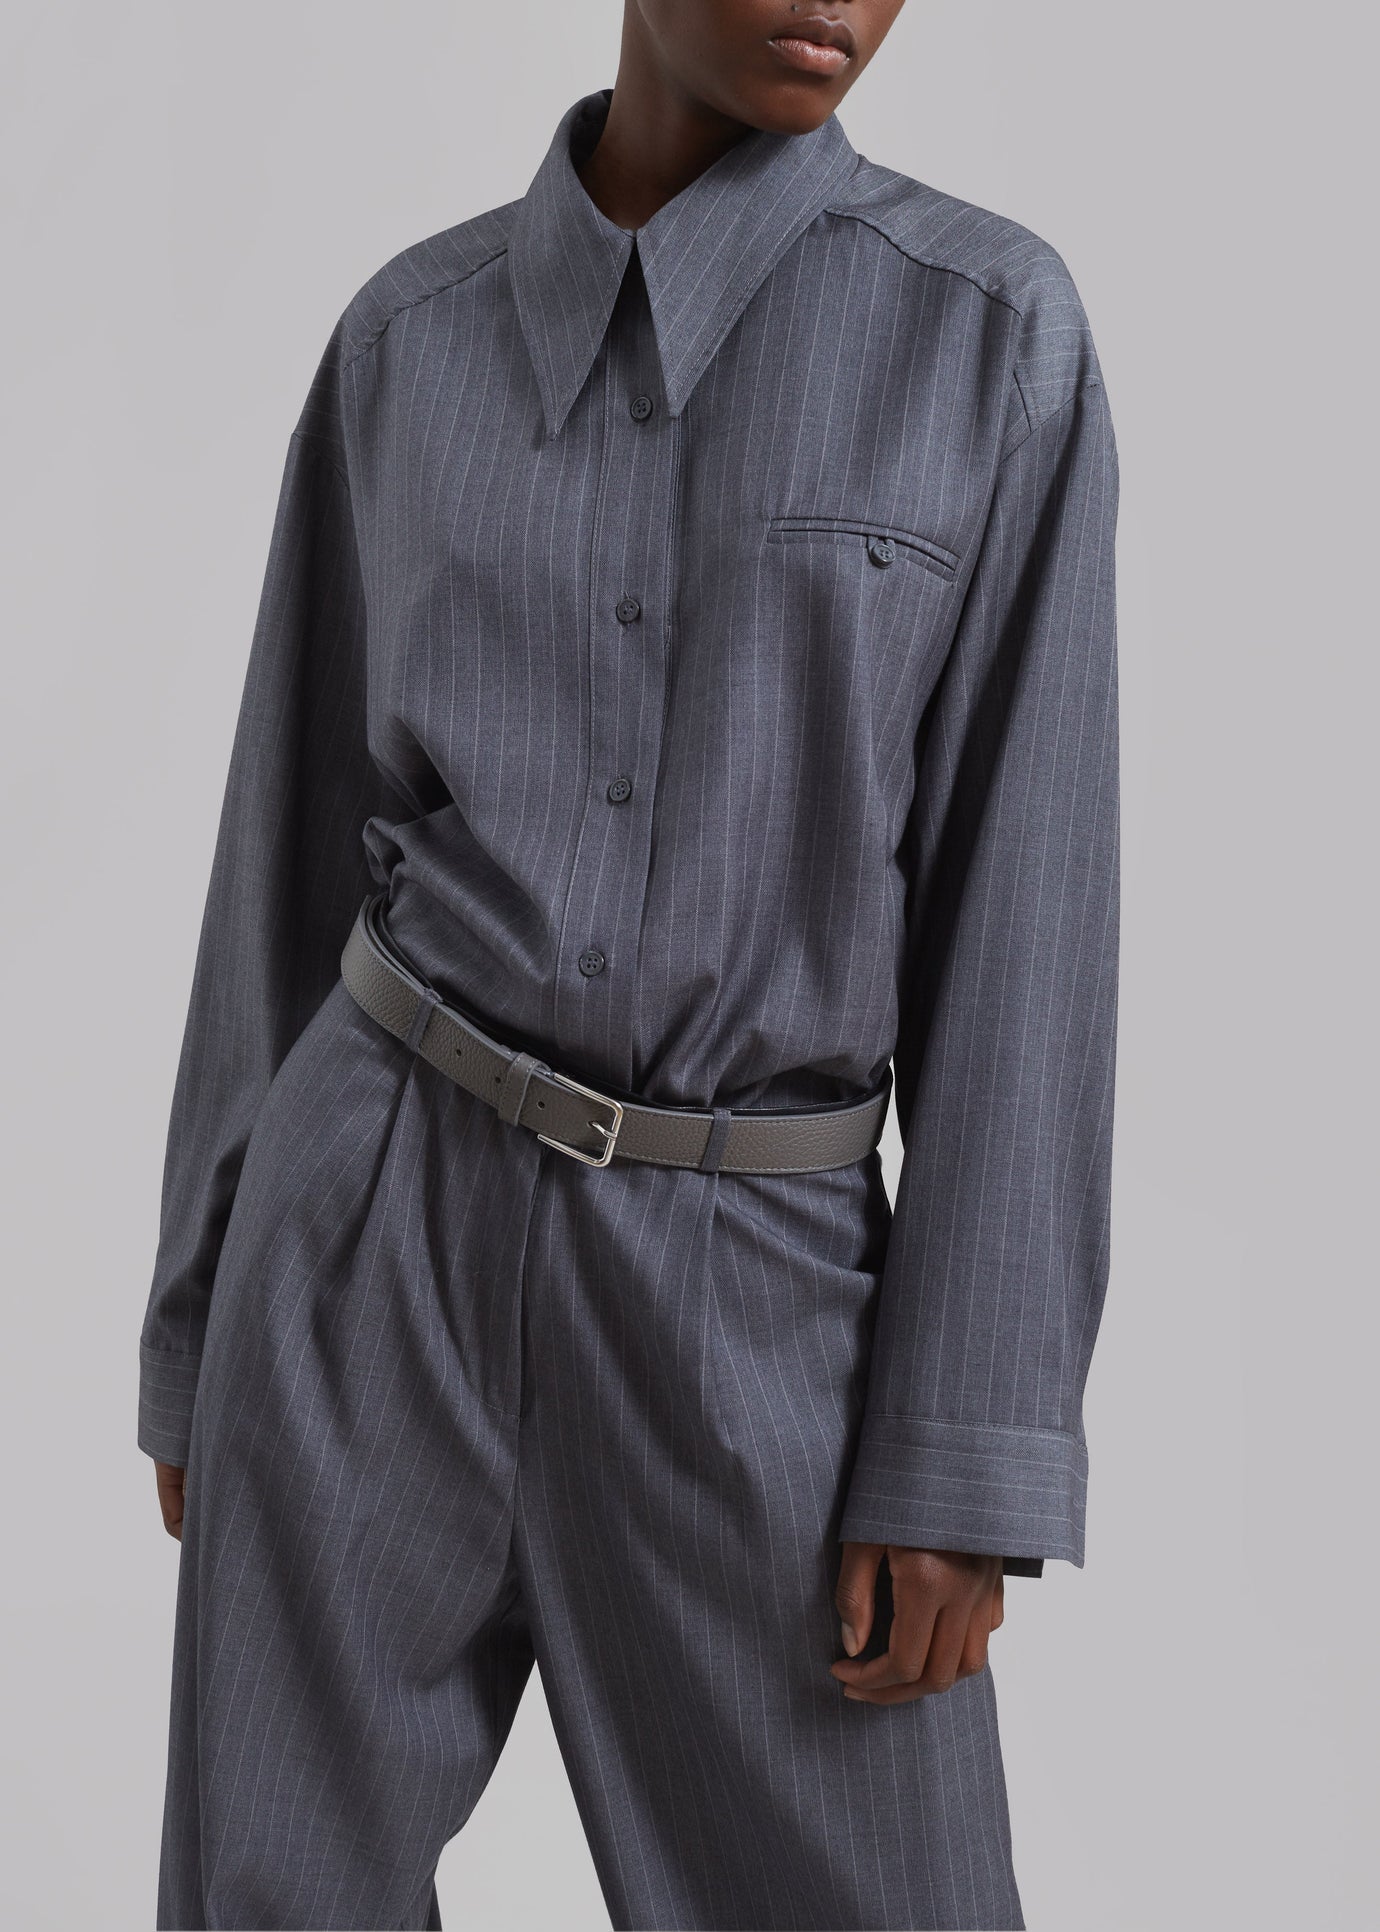 Kerry Button Up Shirt - Grey Pinstripe - 1